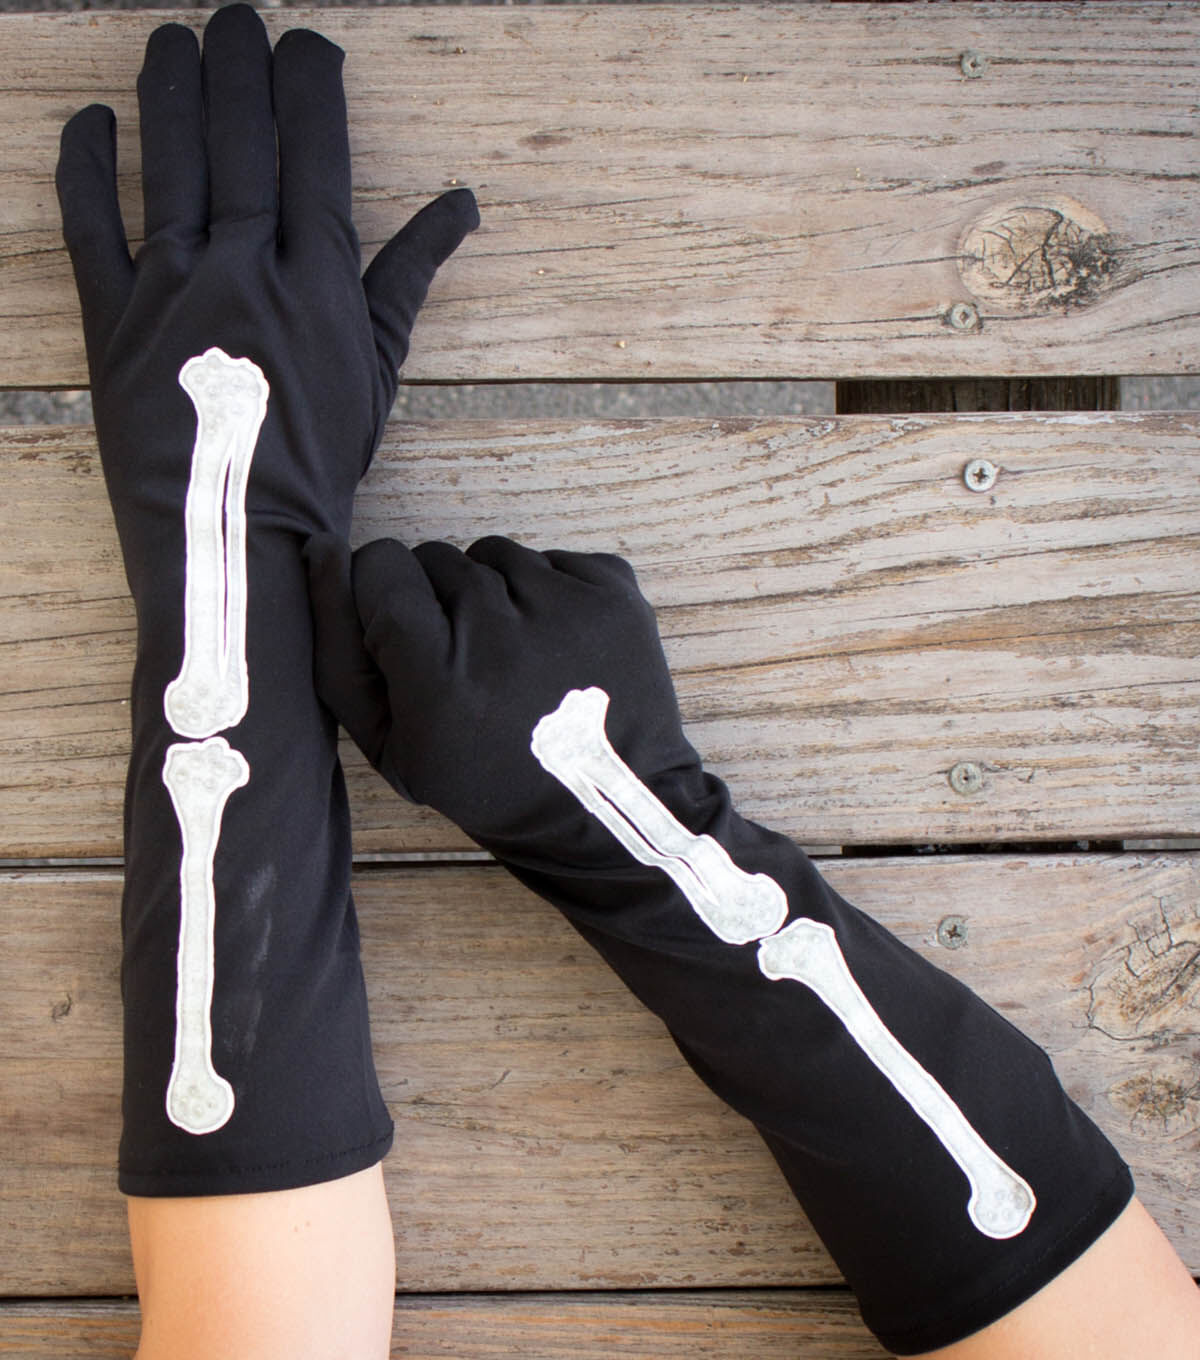 black halloween gloves